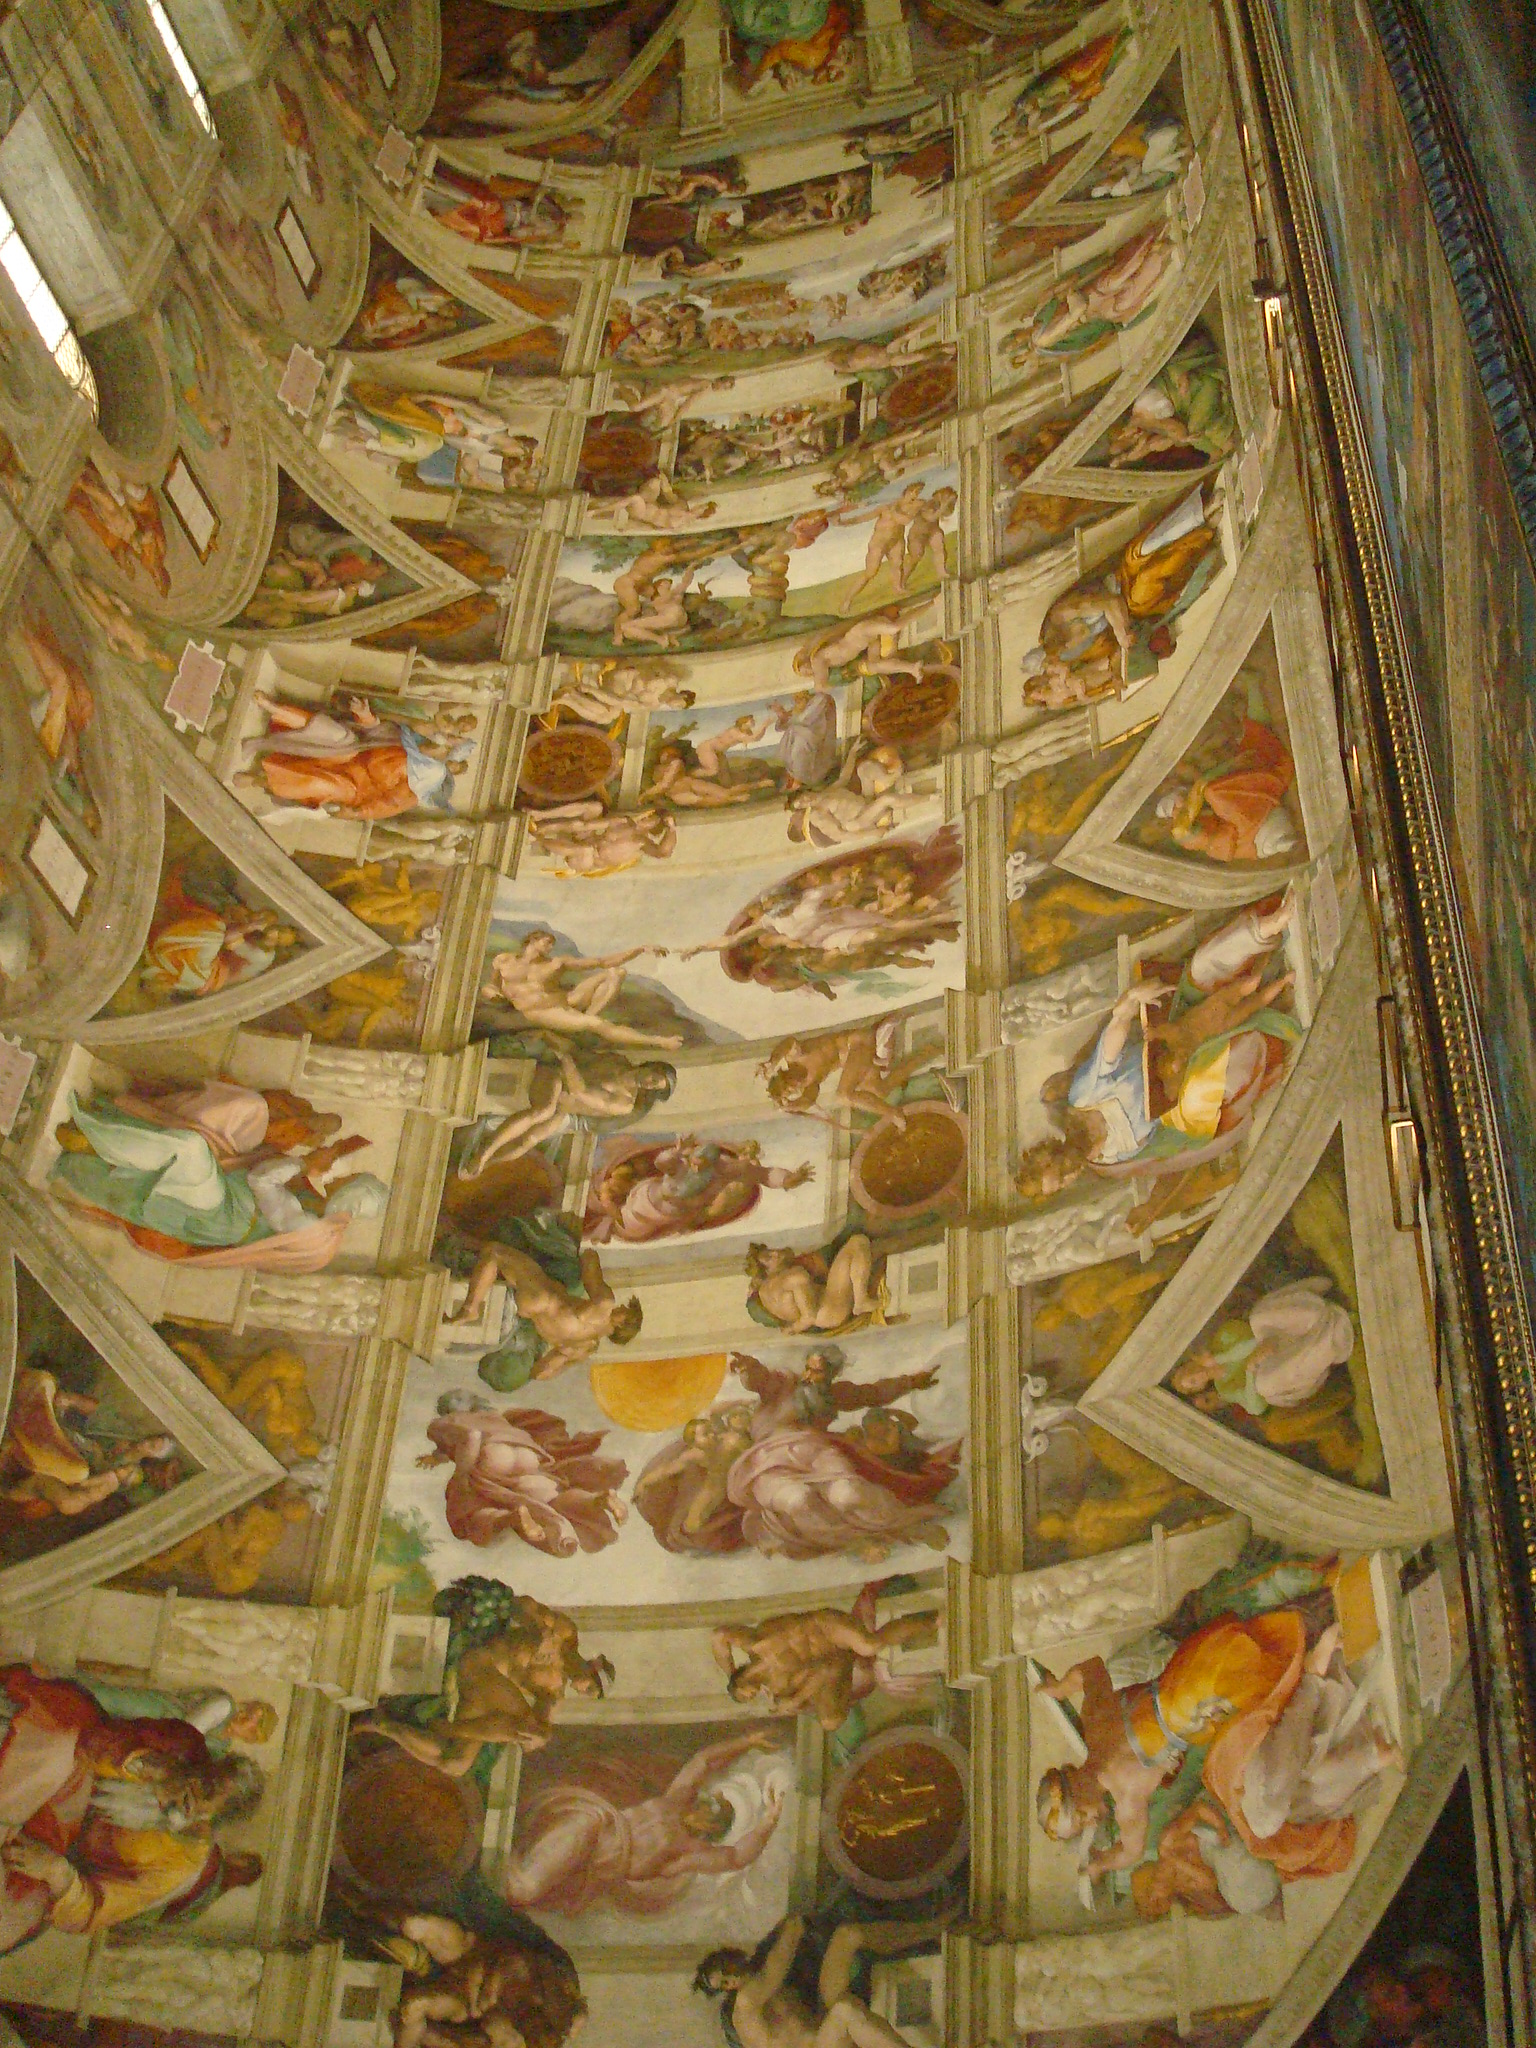 Sistine Chapel by Michaelangelo